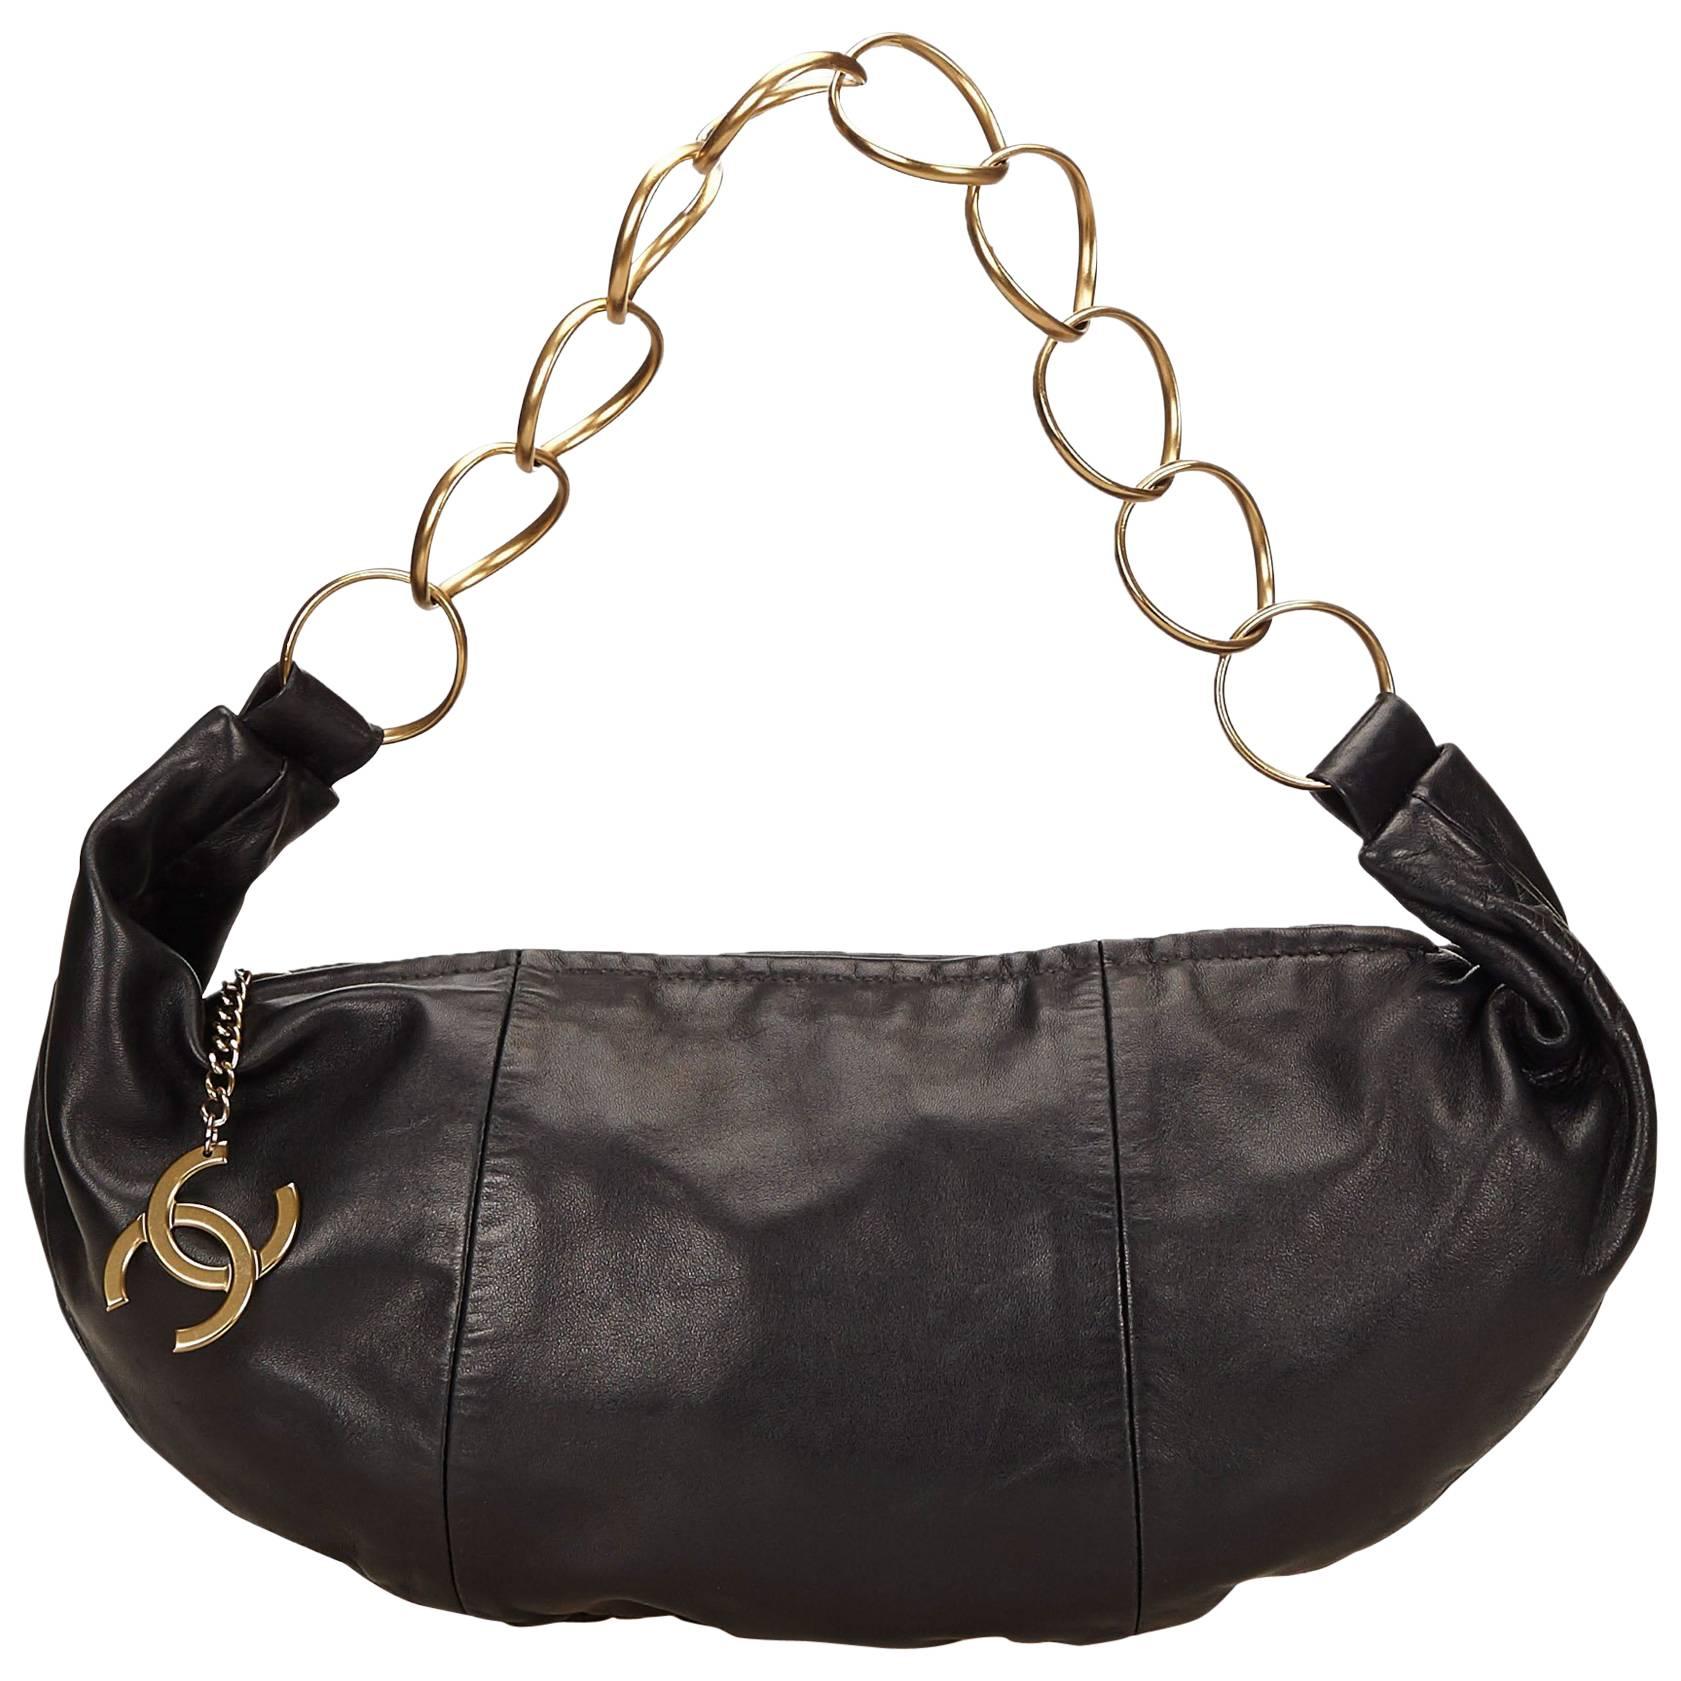 Chanel Black Lambskin Leather "CC" Ring Hobo Bag 